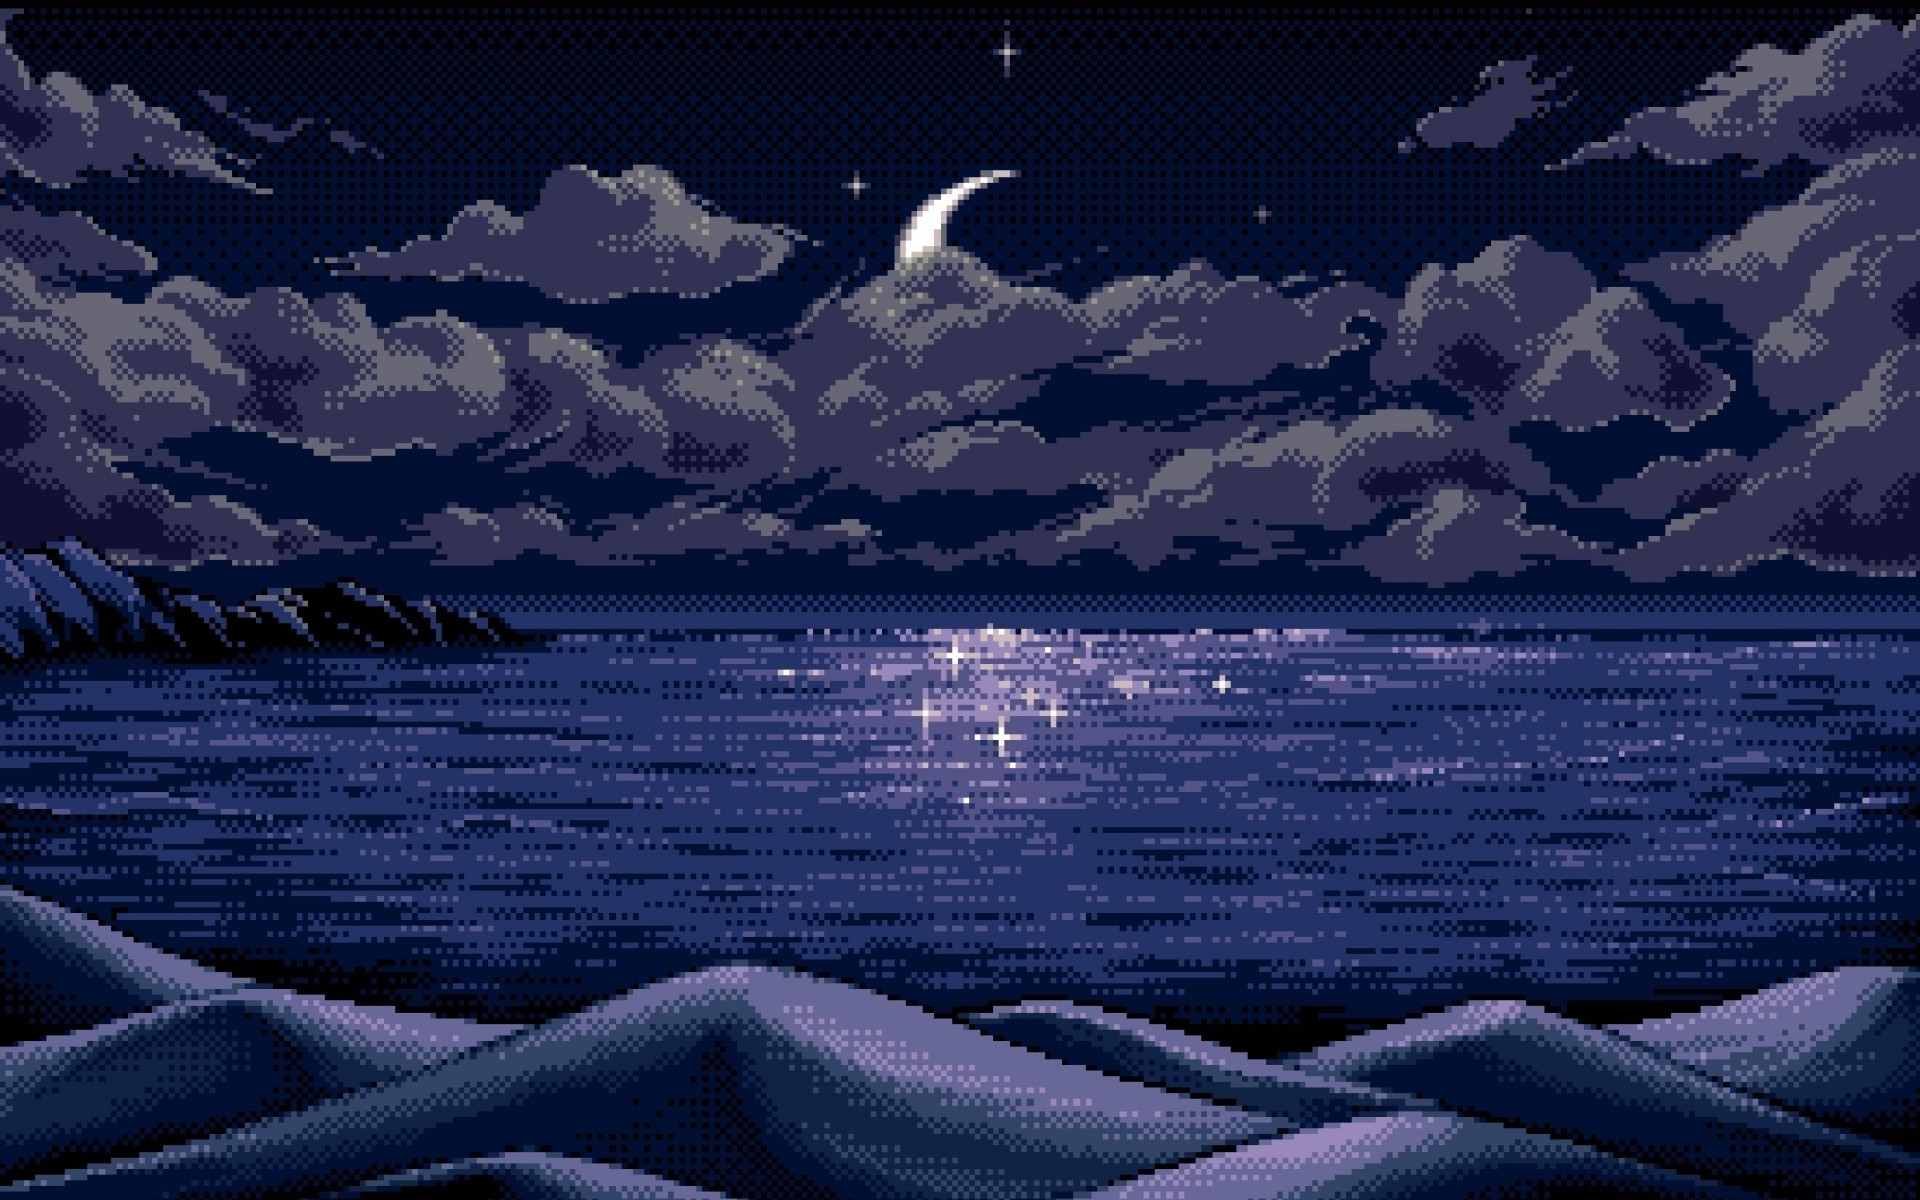 341369 Digital Art Pixel Art Pixels Moon Horizon Blue Reflection Nature Sea Clouds Hills Mountains Night Stars Landscape 